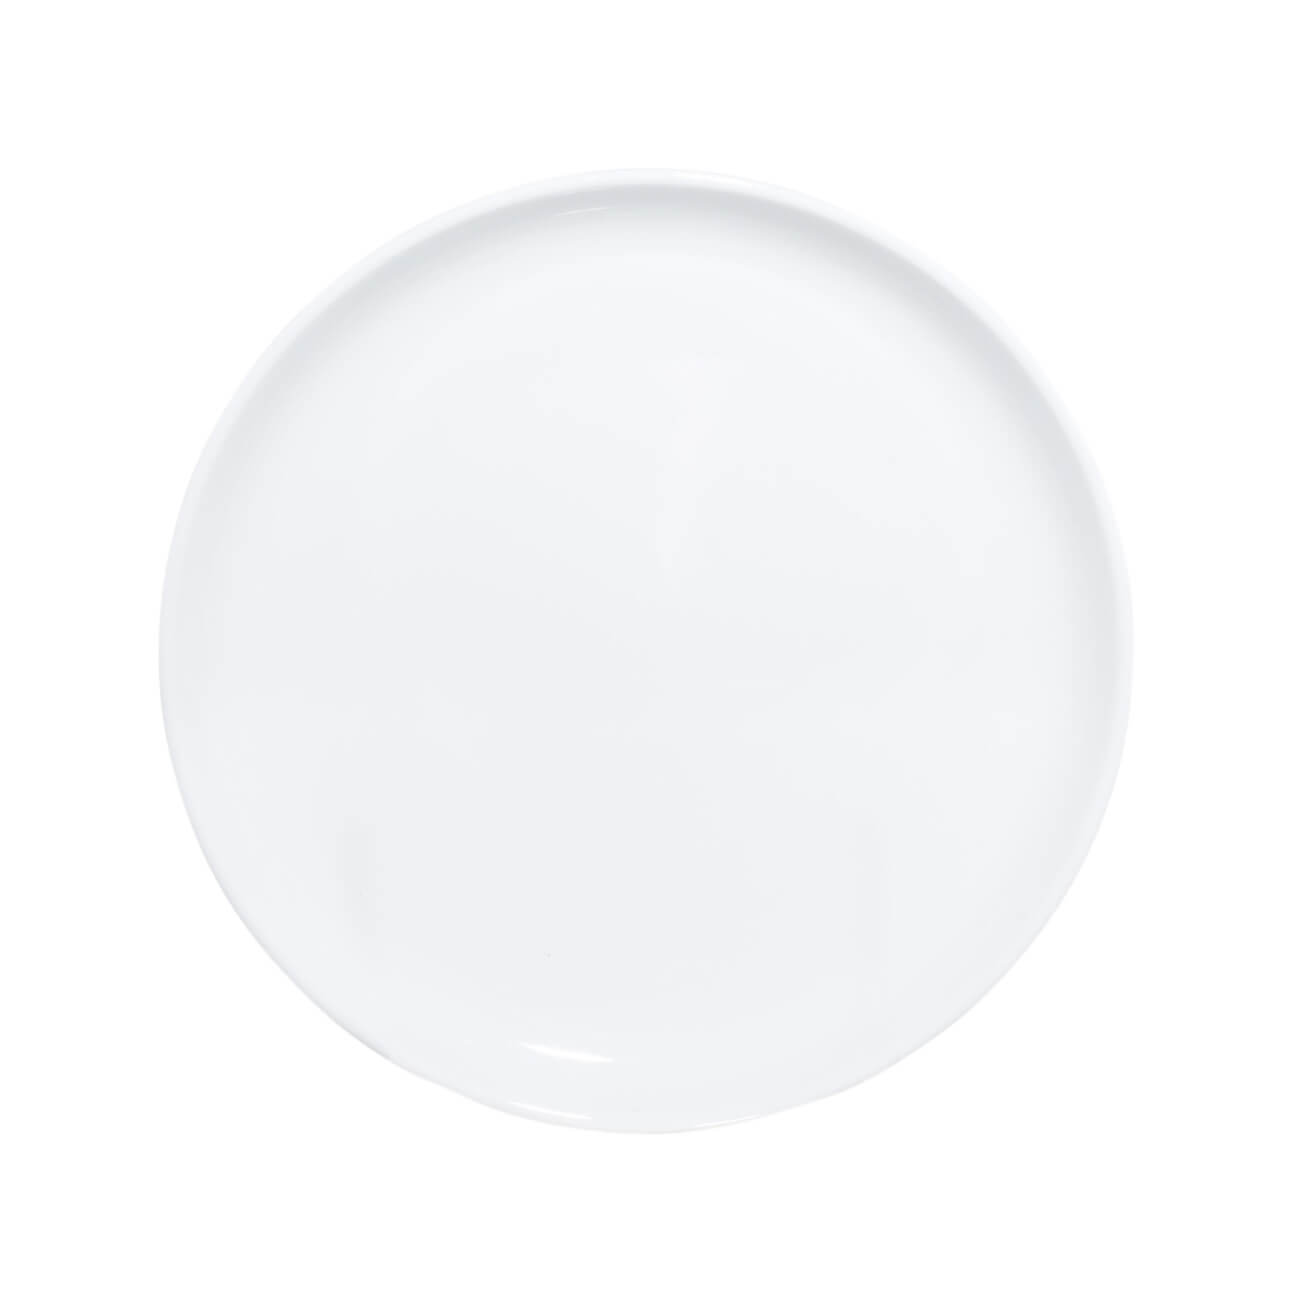 Тарелка десертная, 20 см, фарфор P, белая, Silence тарелка десертная golden opal white купол 19 5 см